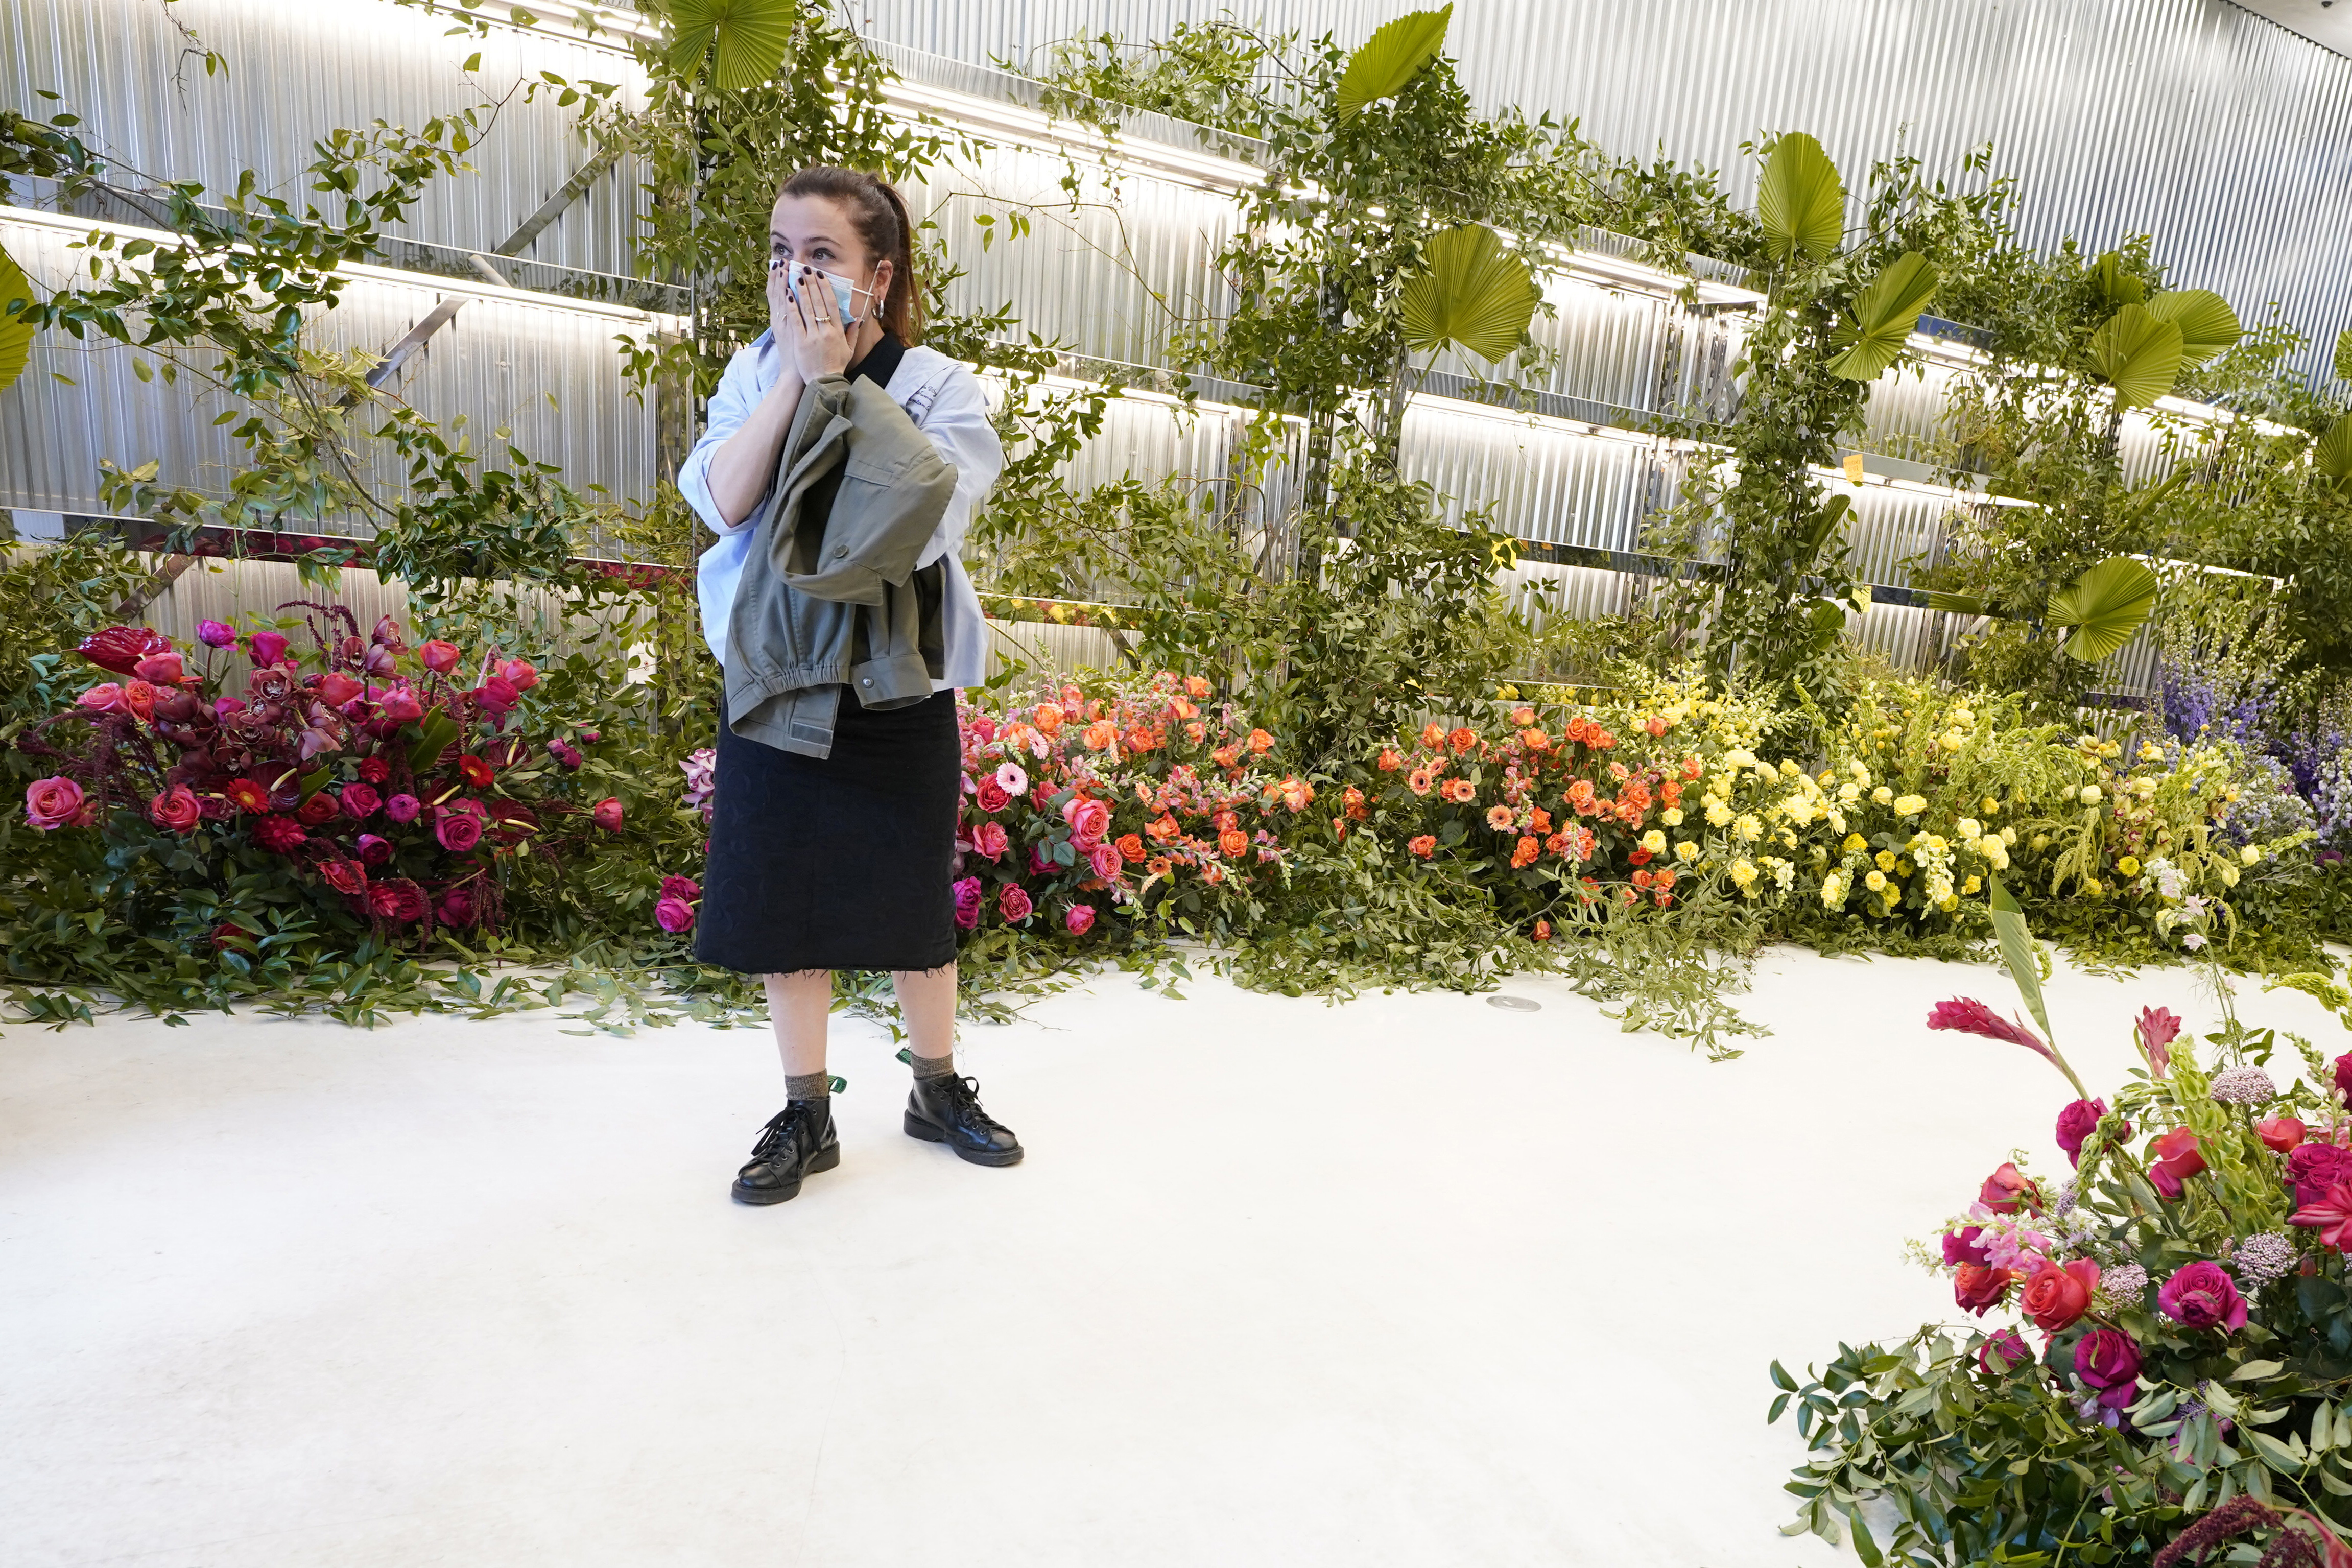 Louis Vuitton show pays tribute to designer Virgil Abloh - Taipei Times